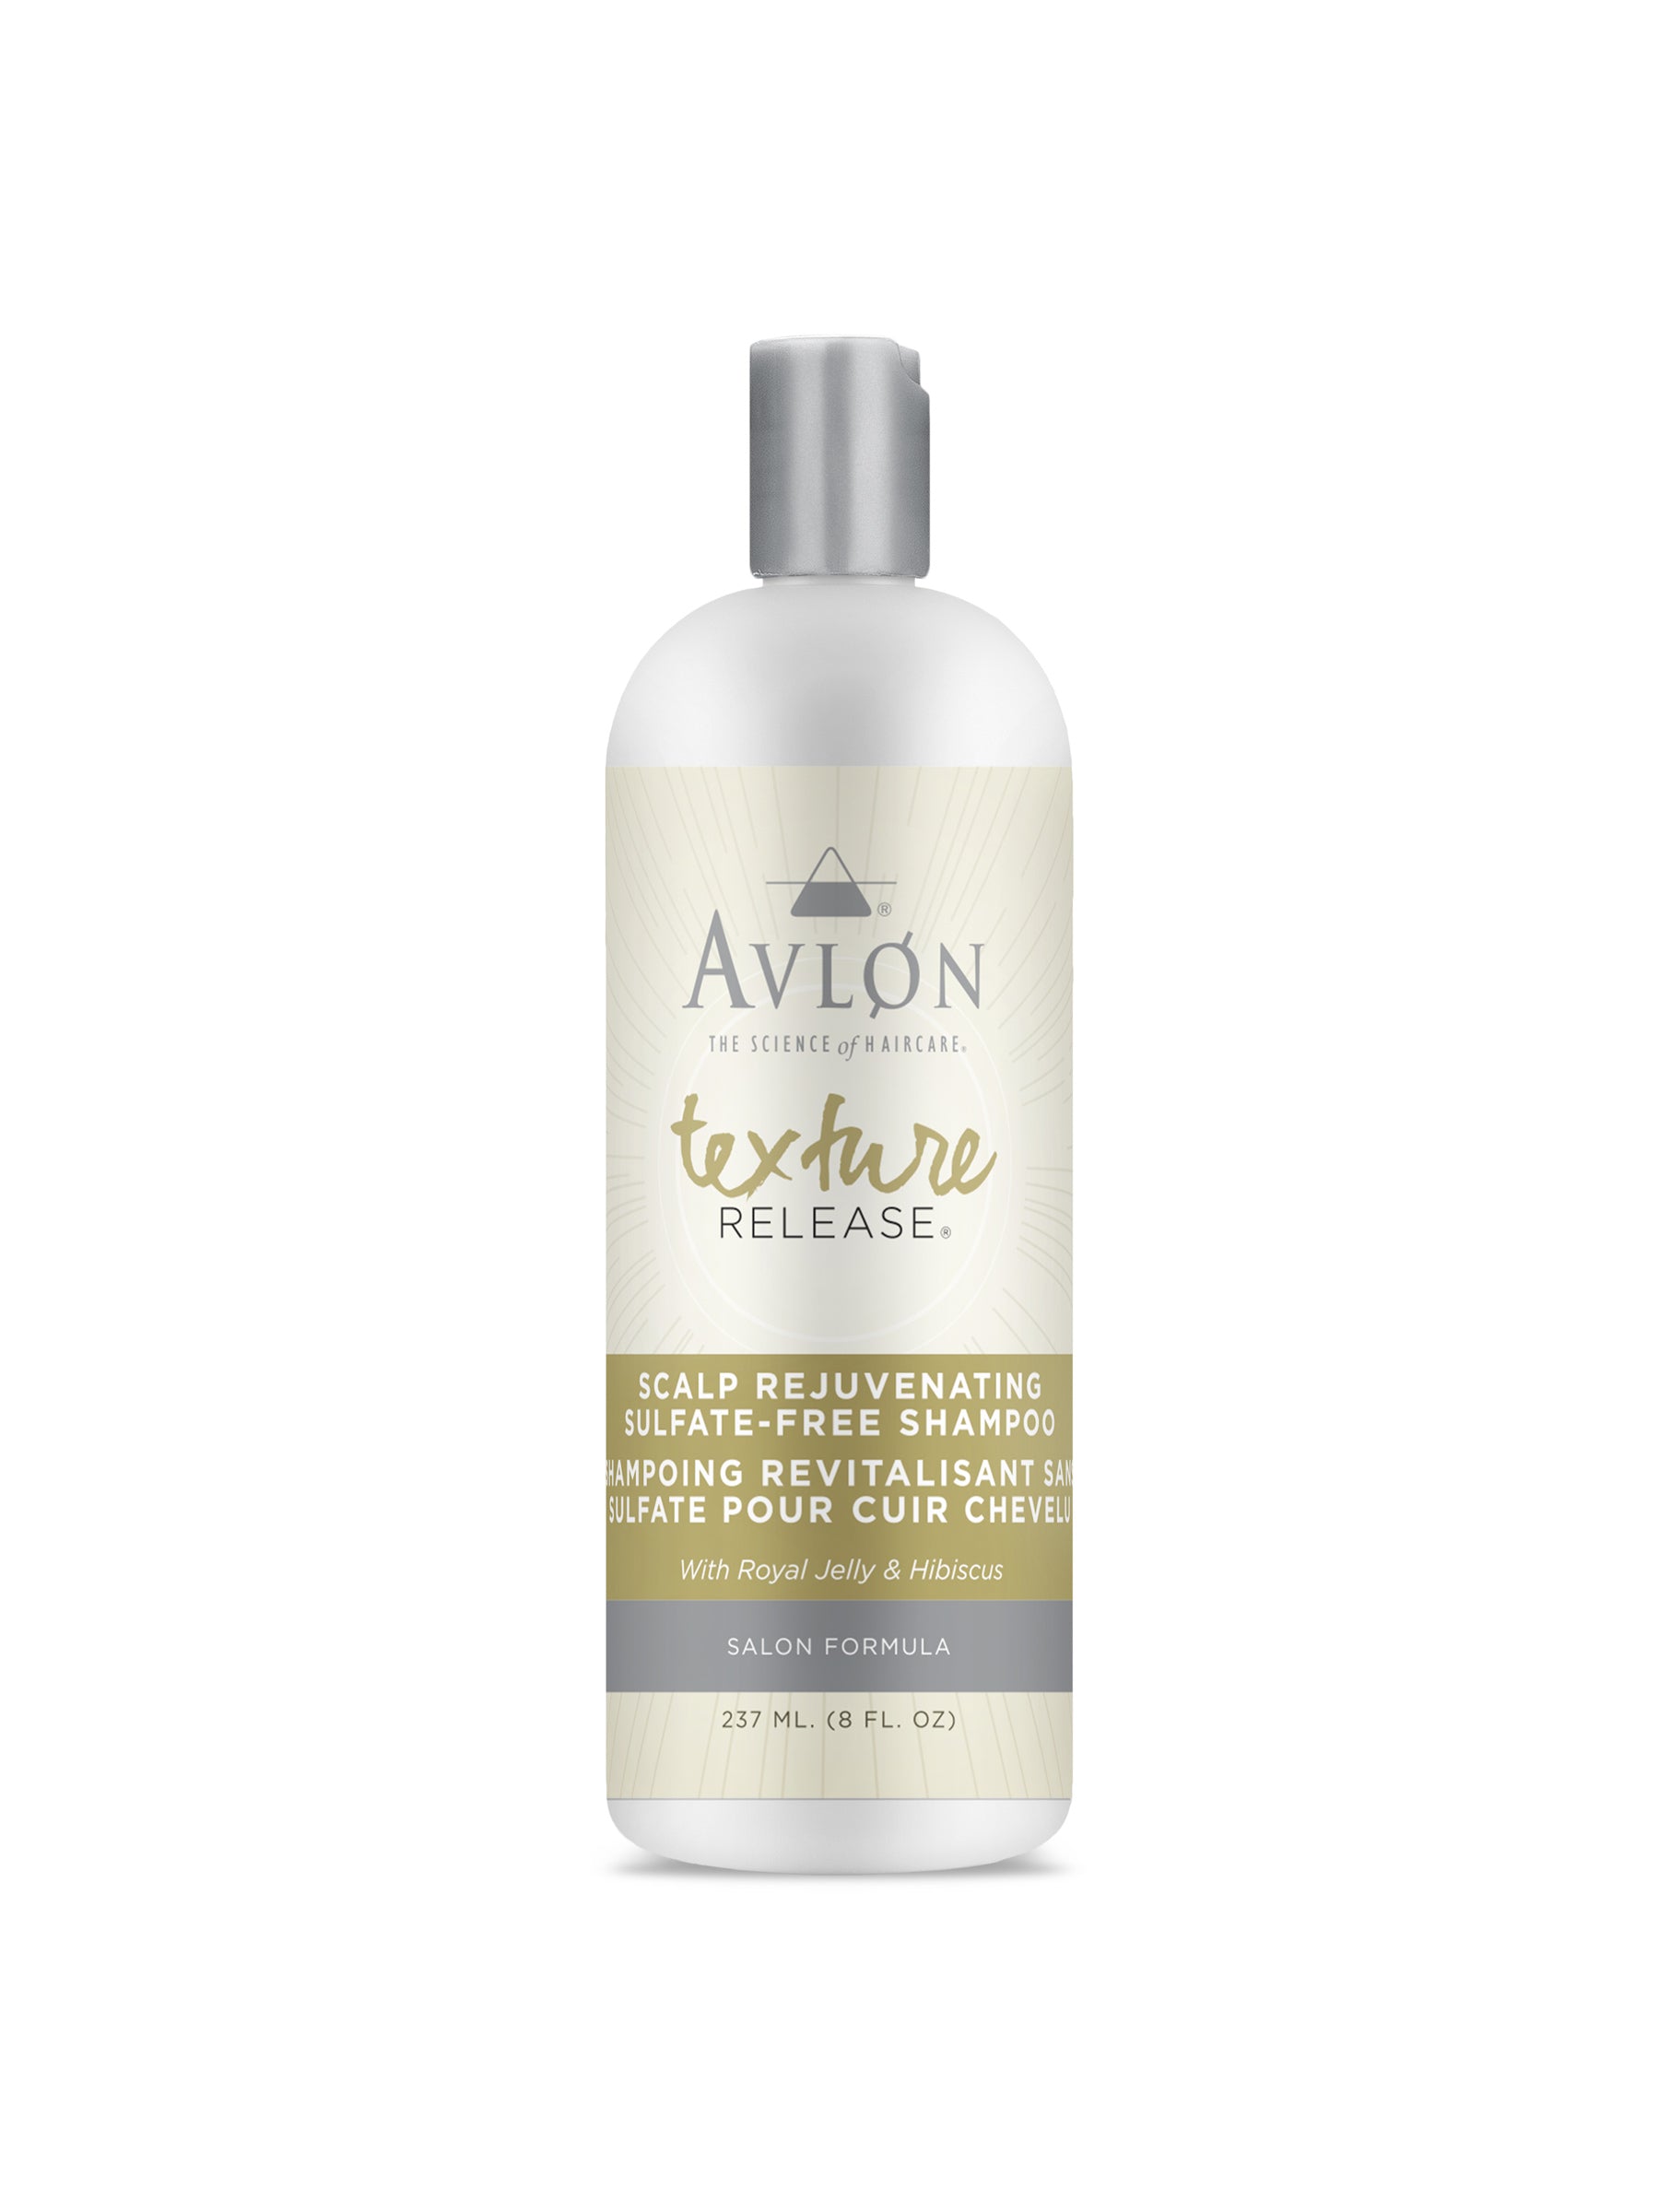 Texture Release Scalp Rejuvenating Sulfate-Free Shampoo